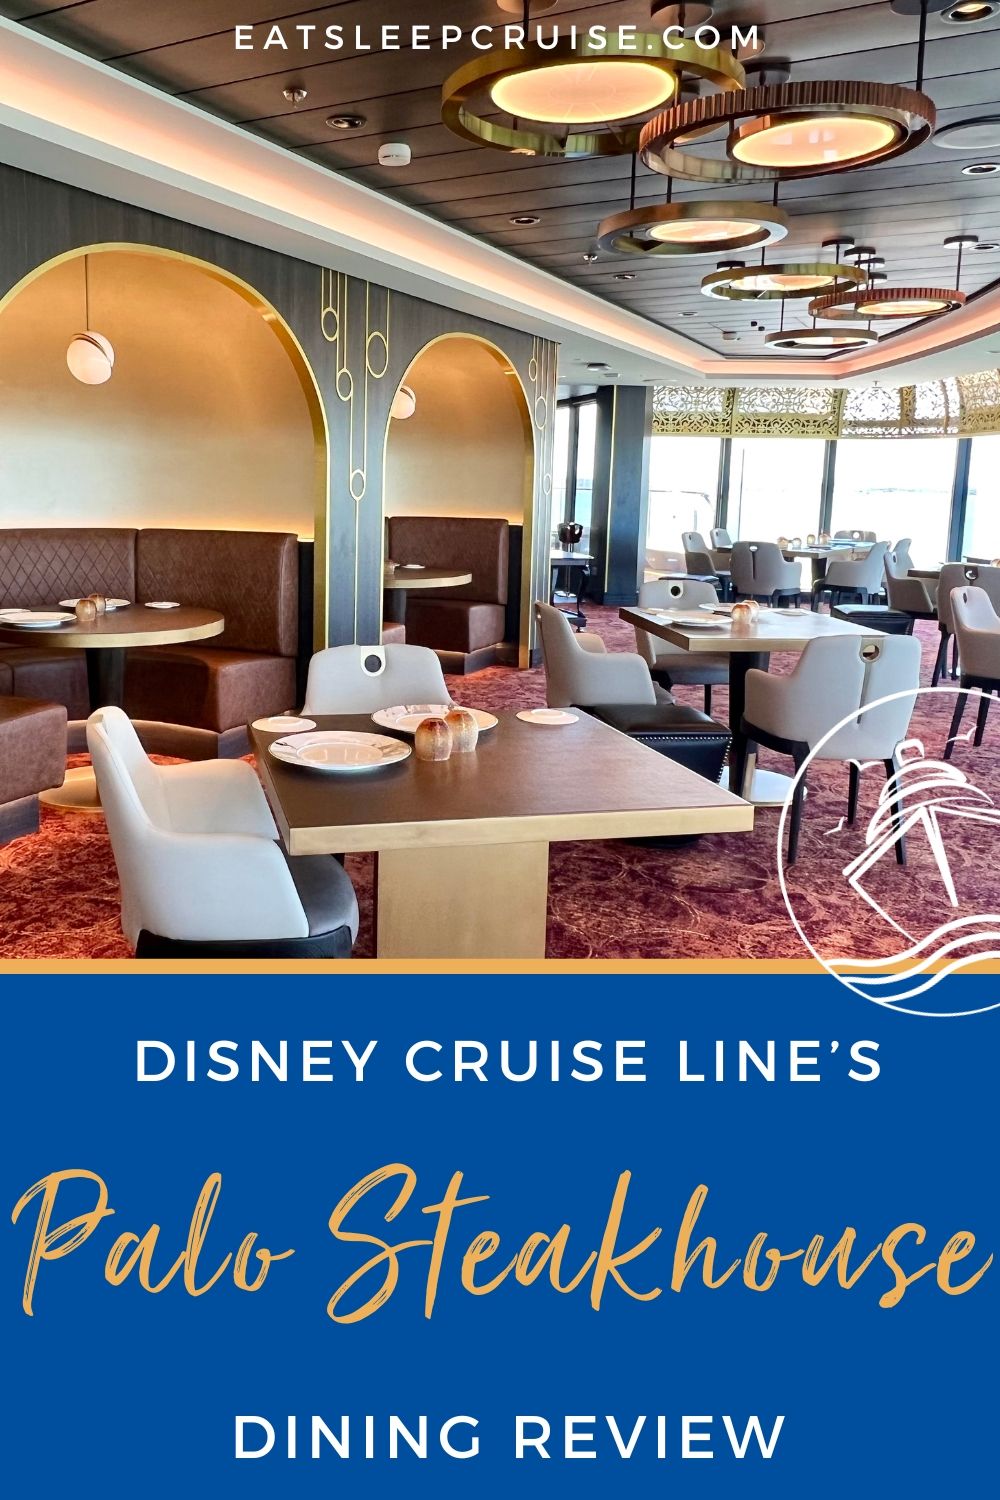 Palo Steakhouse on Disney Wish Restaurant Review